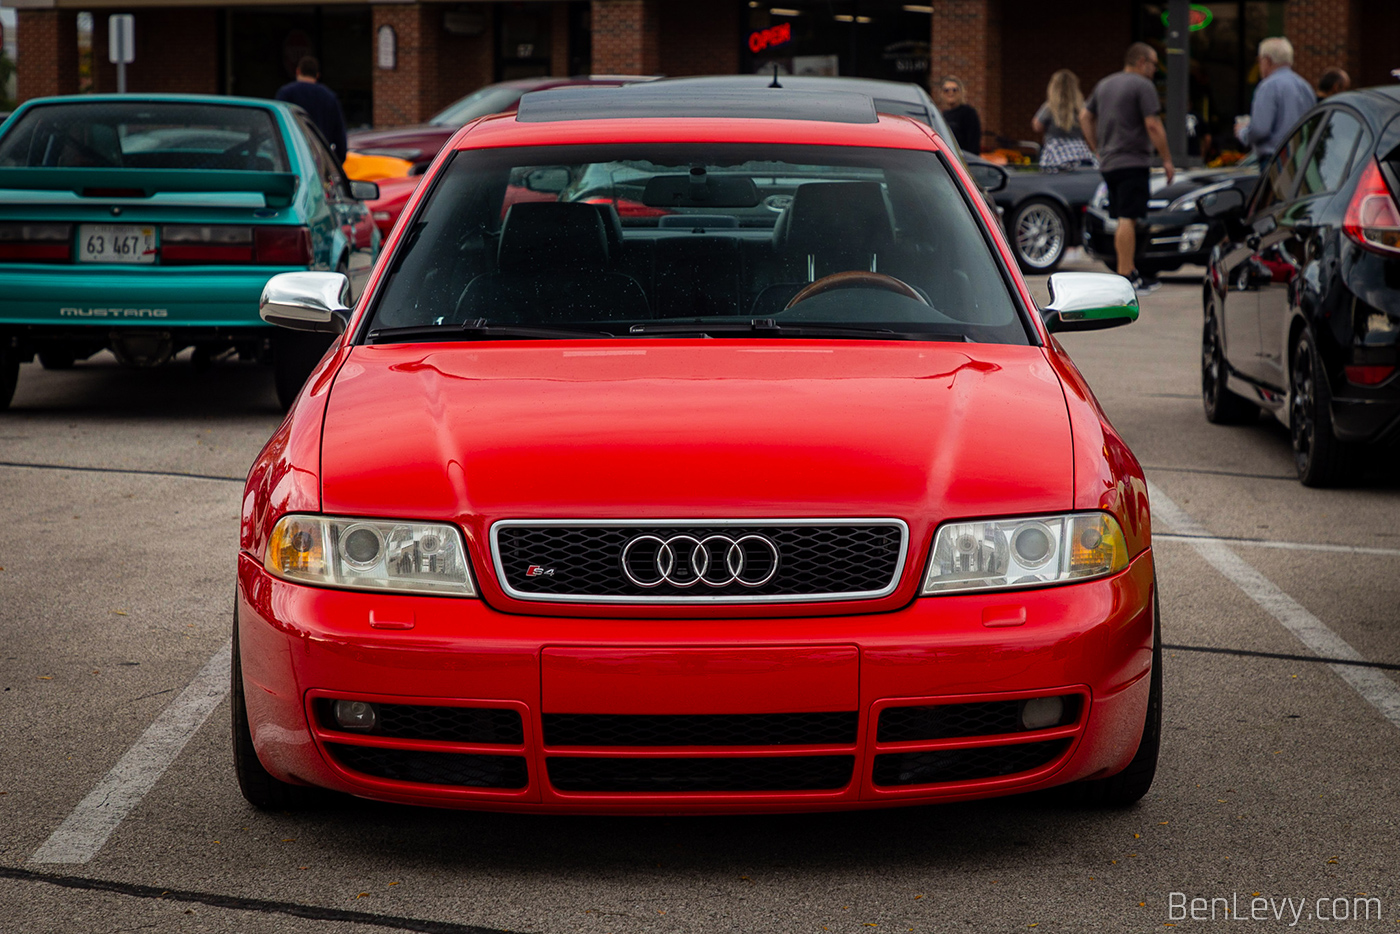 Front of Red Audi S4 Sedan